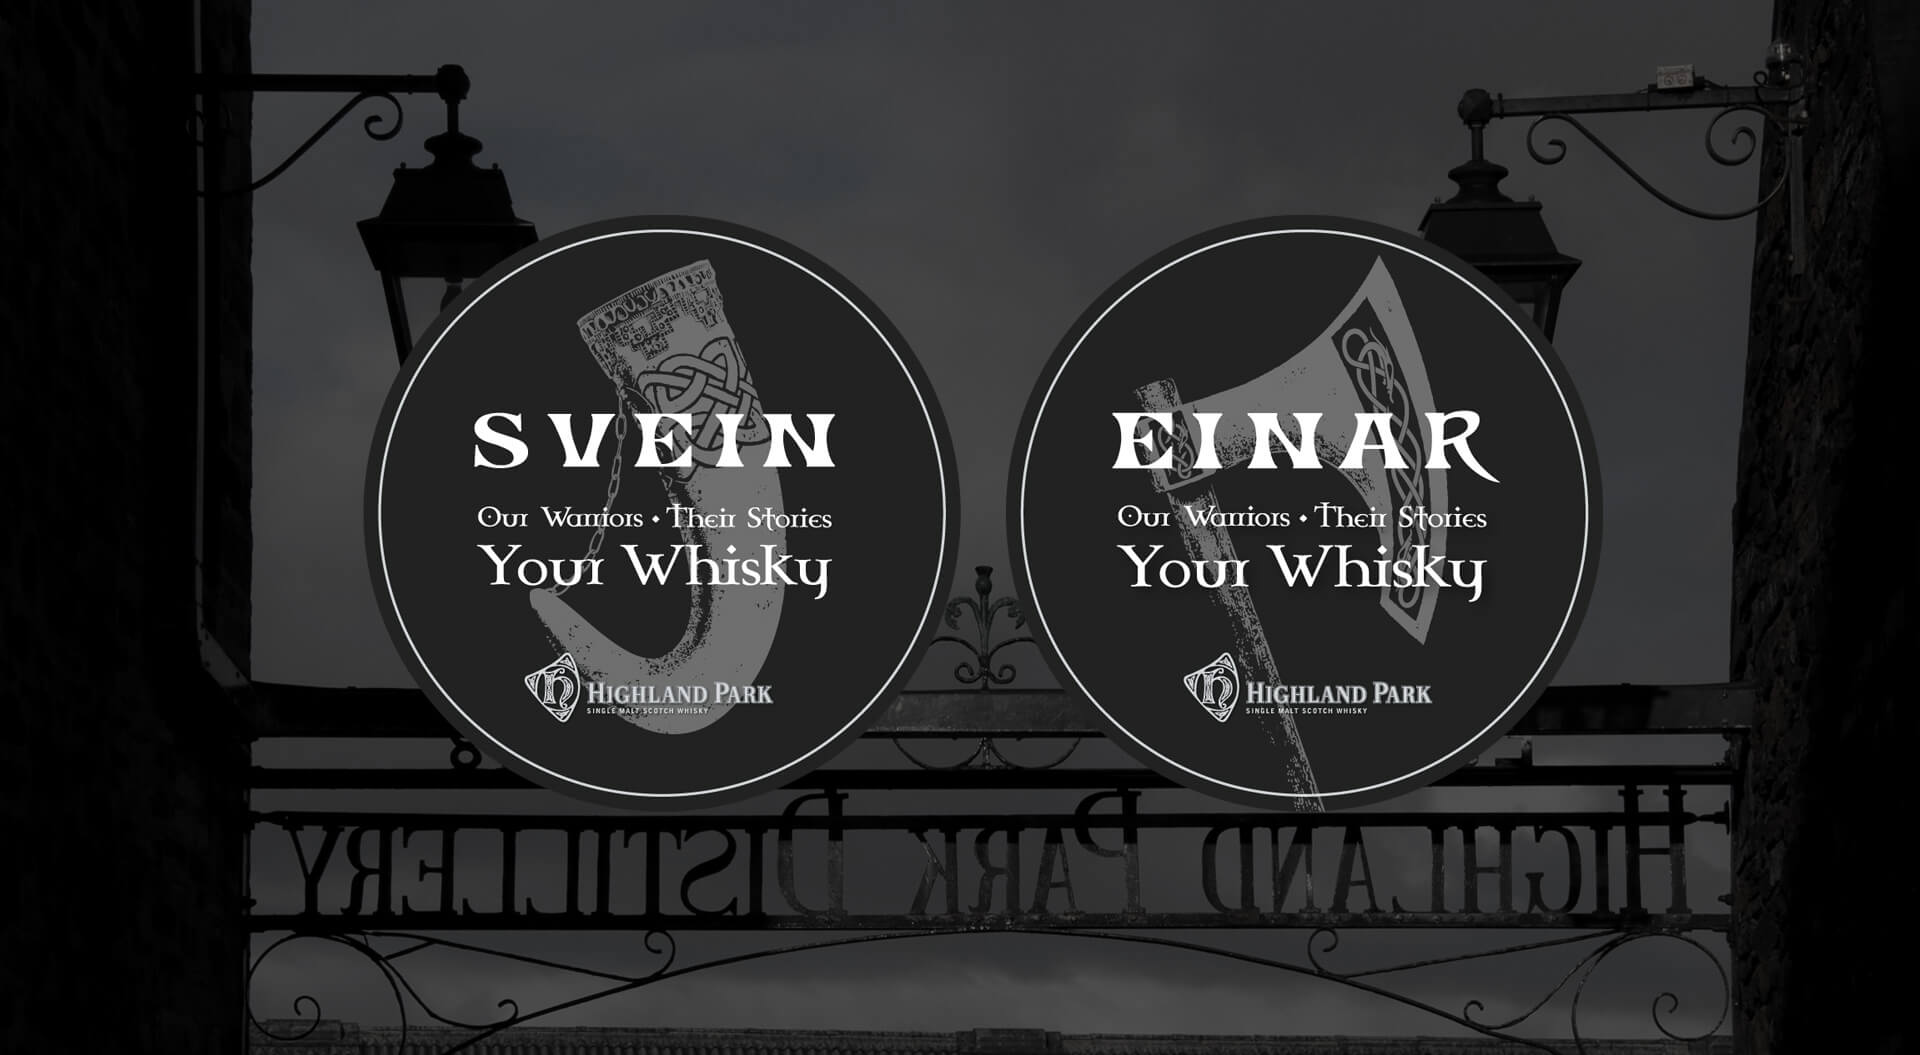 Highland Park Single Malt Scotch Whisky branding for Svein and Einar